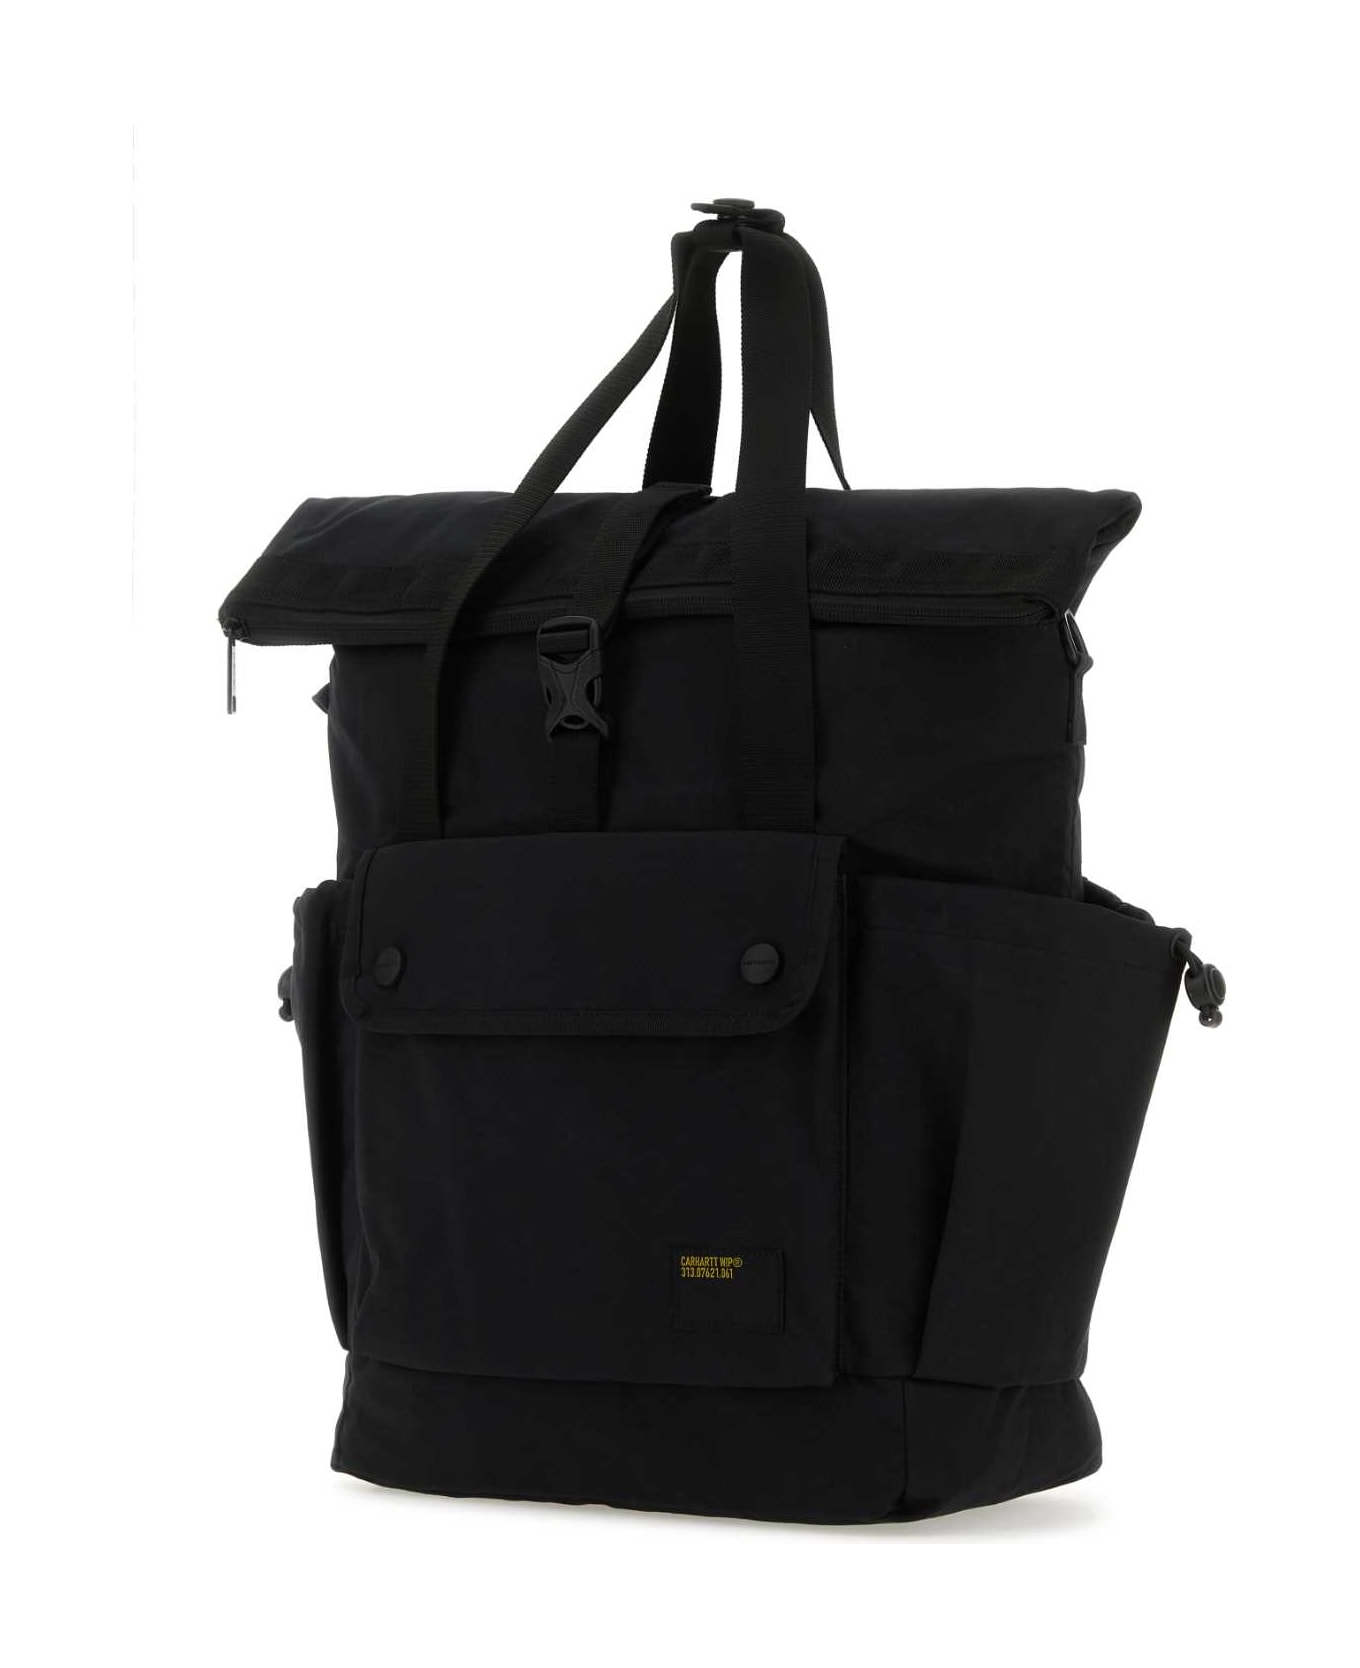 Carhartt Black Fabric Haste Tote Bag - BLACK トートバッグ